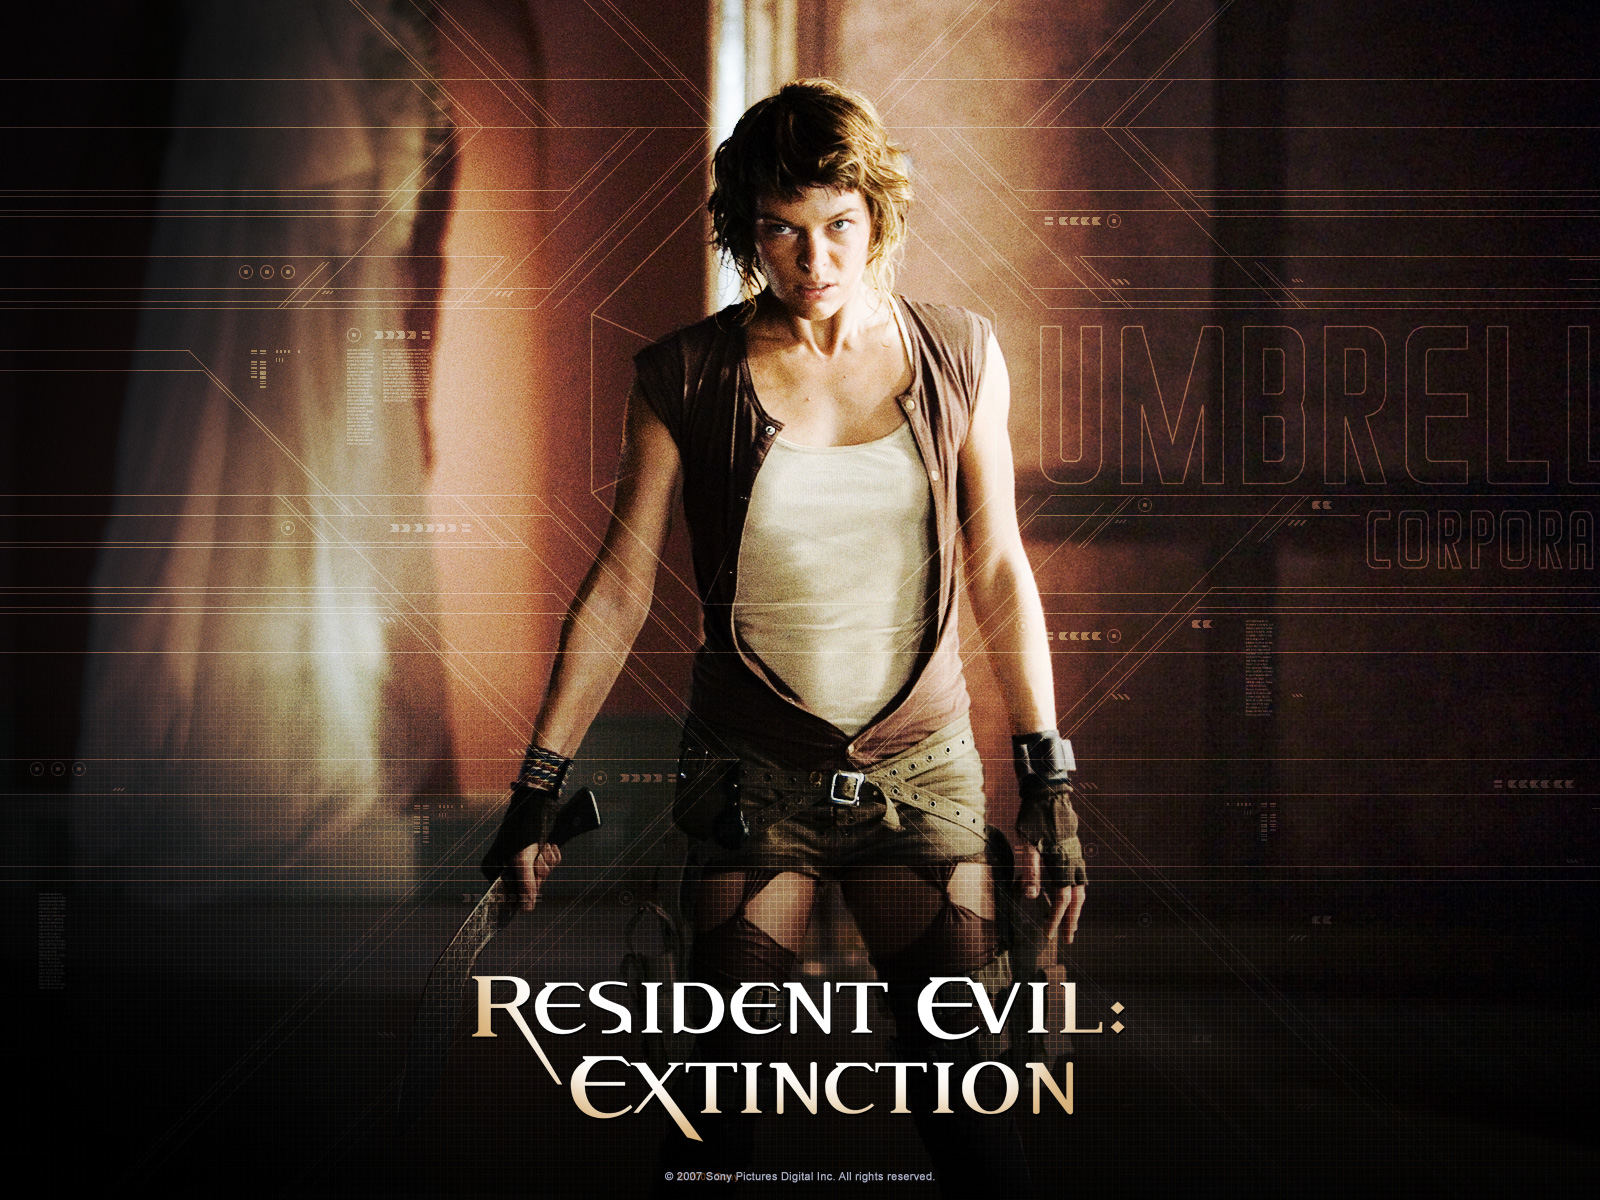 Resident Evil images Resident Evil : Extinction HD wallpaper and ...